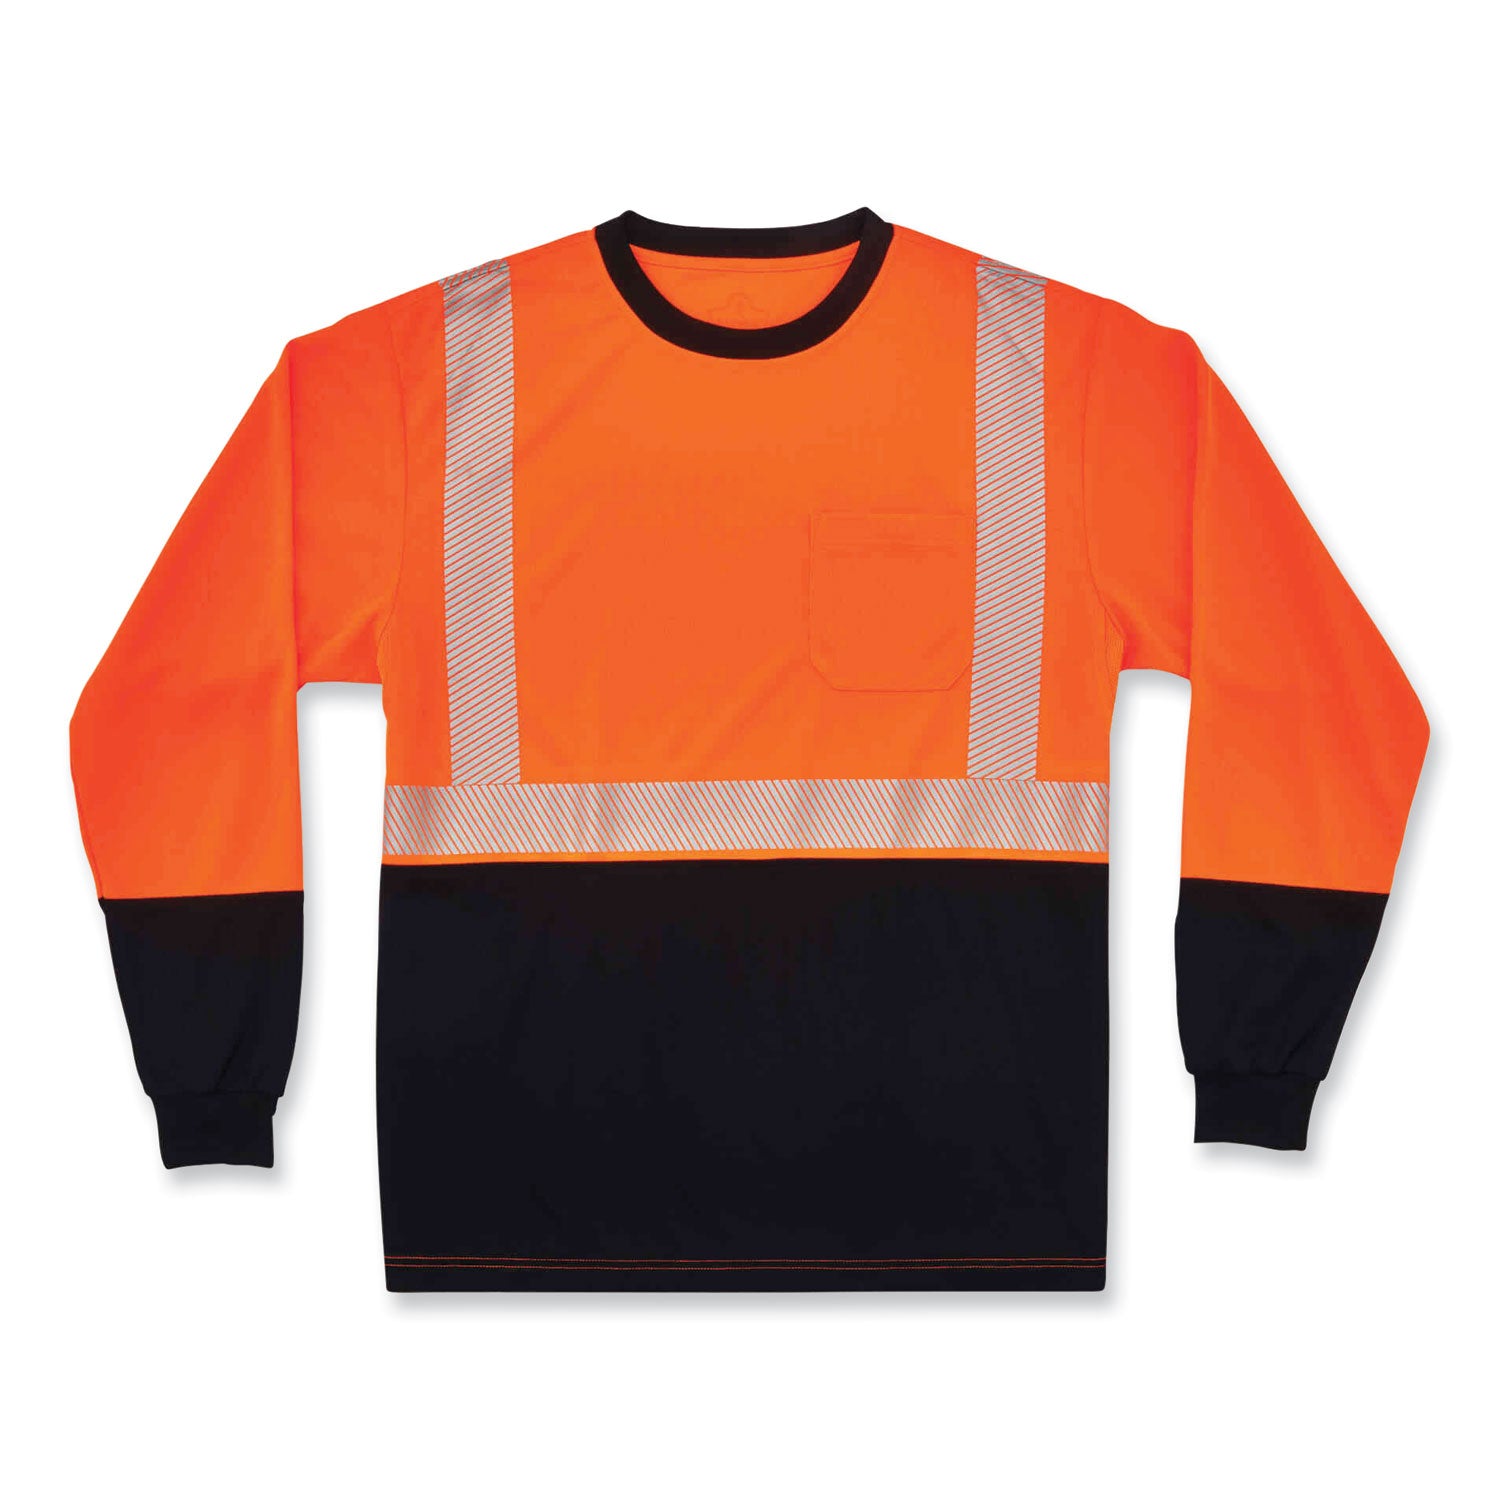 glowear-8281bk-class-2-long-sleeve-shirt-with-black-bottom-polyester-3x-large-orange-ships-in-1-3-business-days_ego22687 - 1